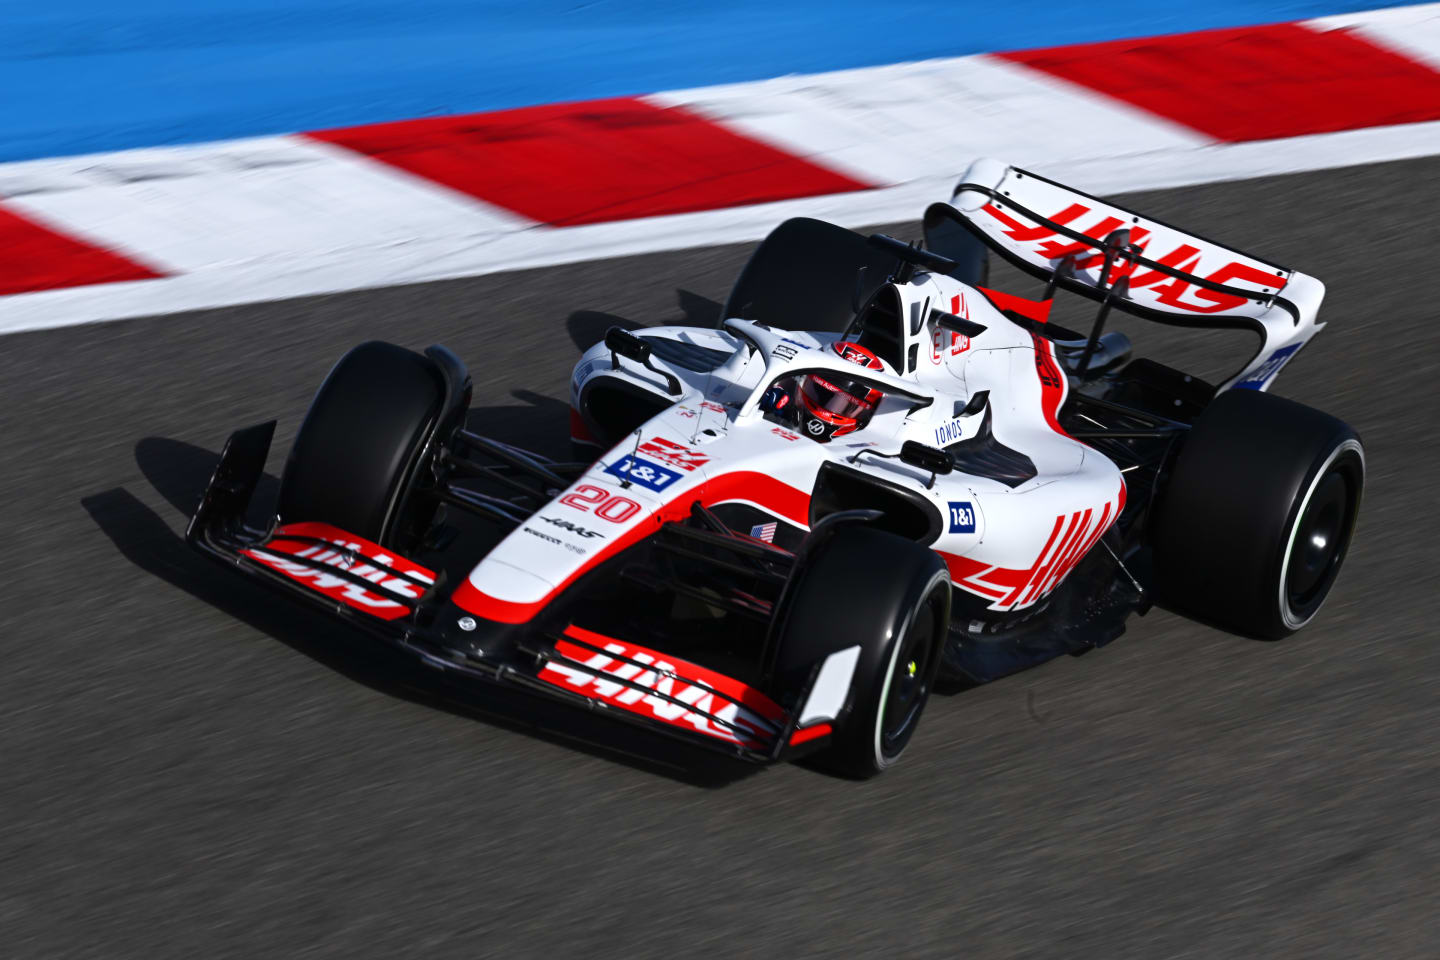 BAHRAIN, BAHRAIN - MARCH 18: Kevin Magnussen of Denmark driving the (20) Haas F1 VF-22 Ferrari on